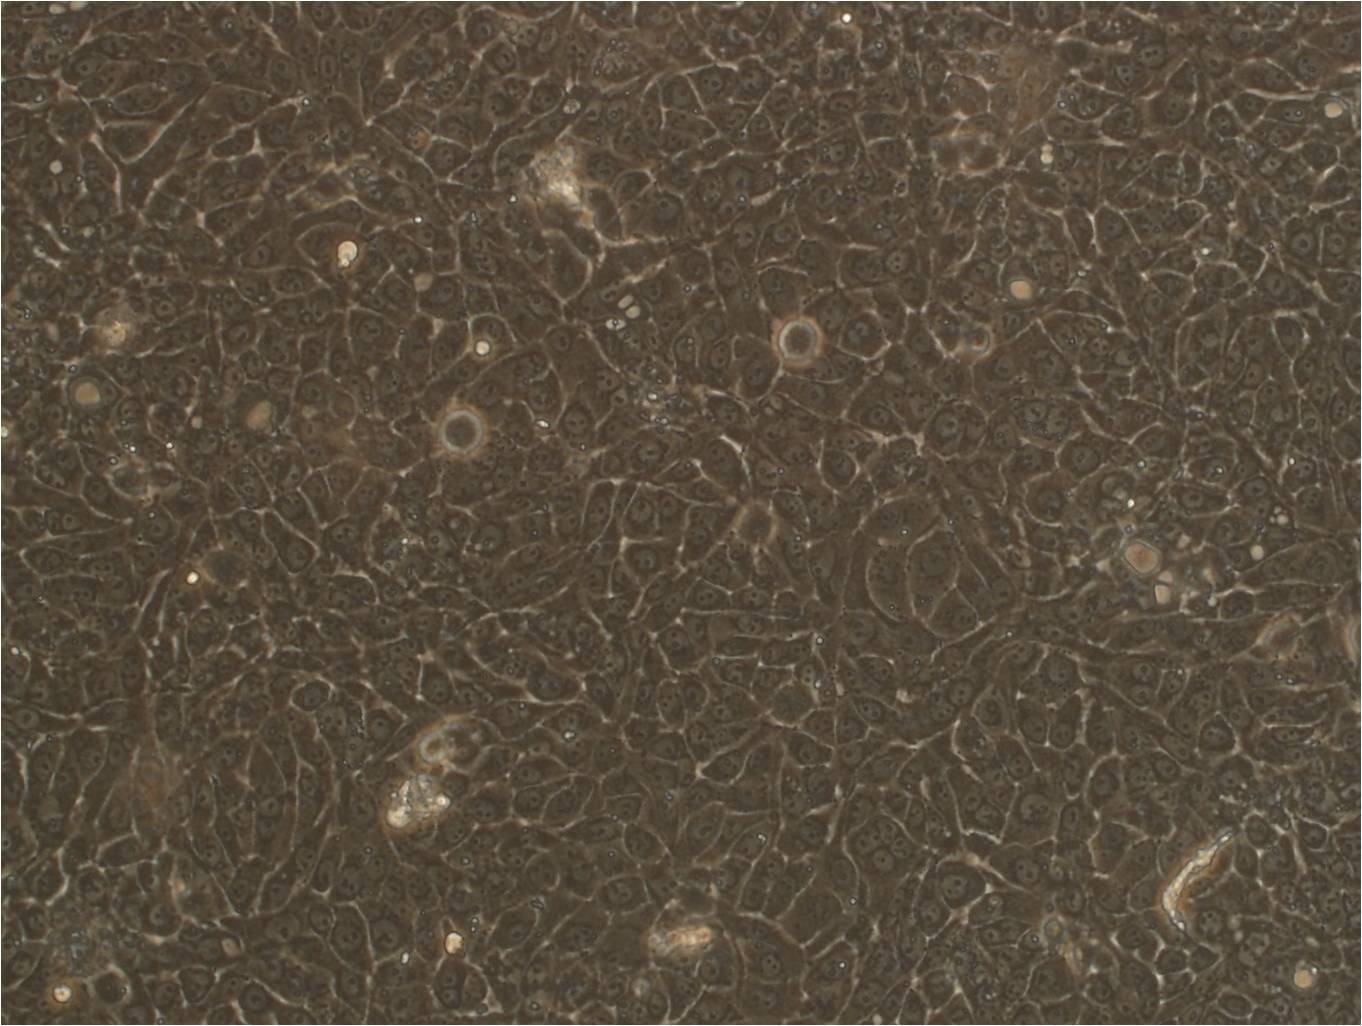 SGC-996 epithelioid cells人胆囊癌细胞系